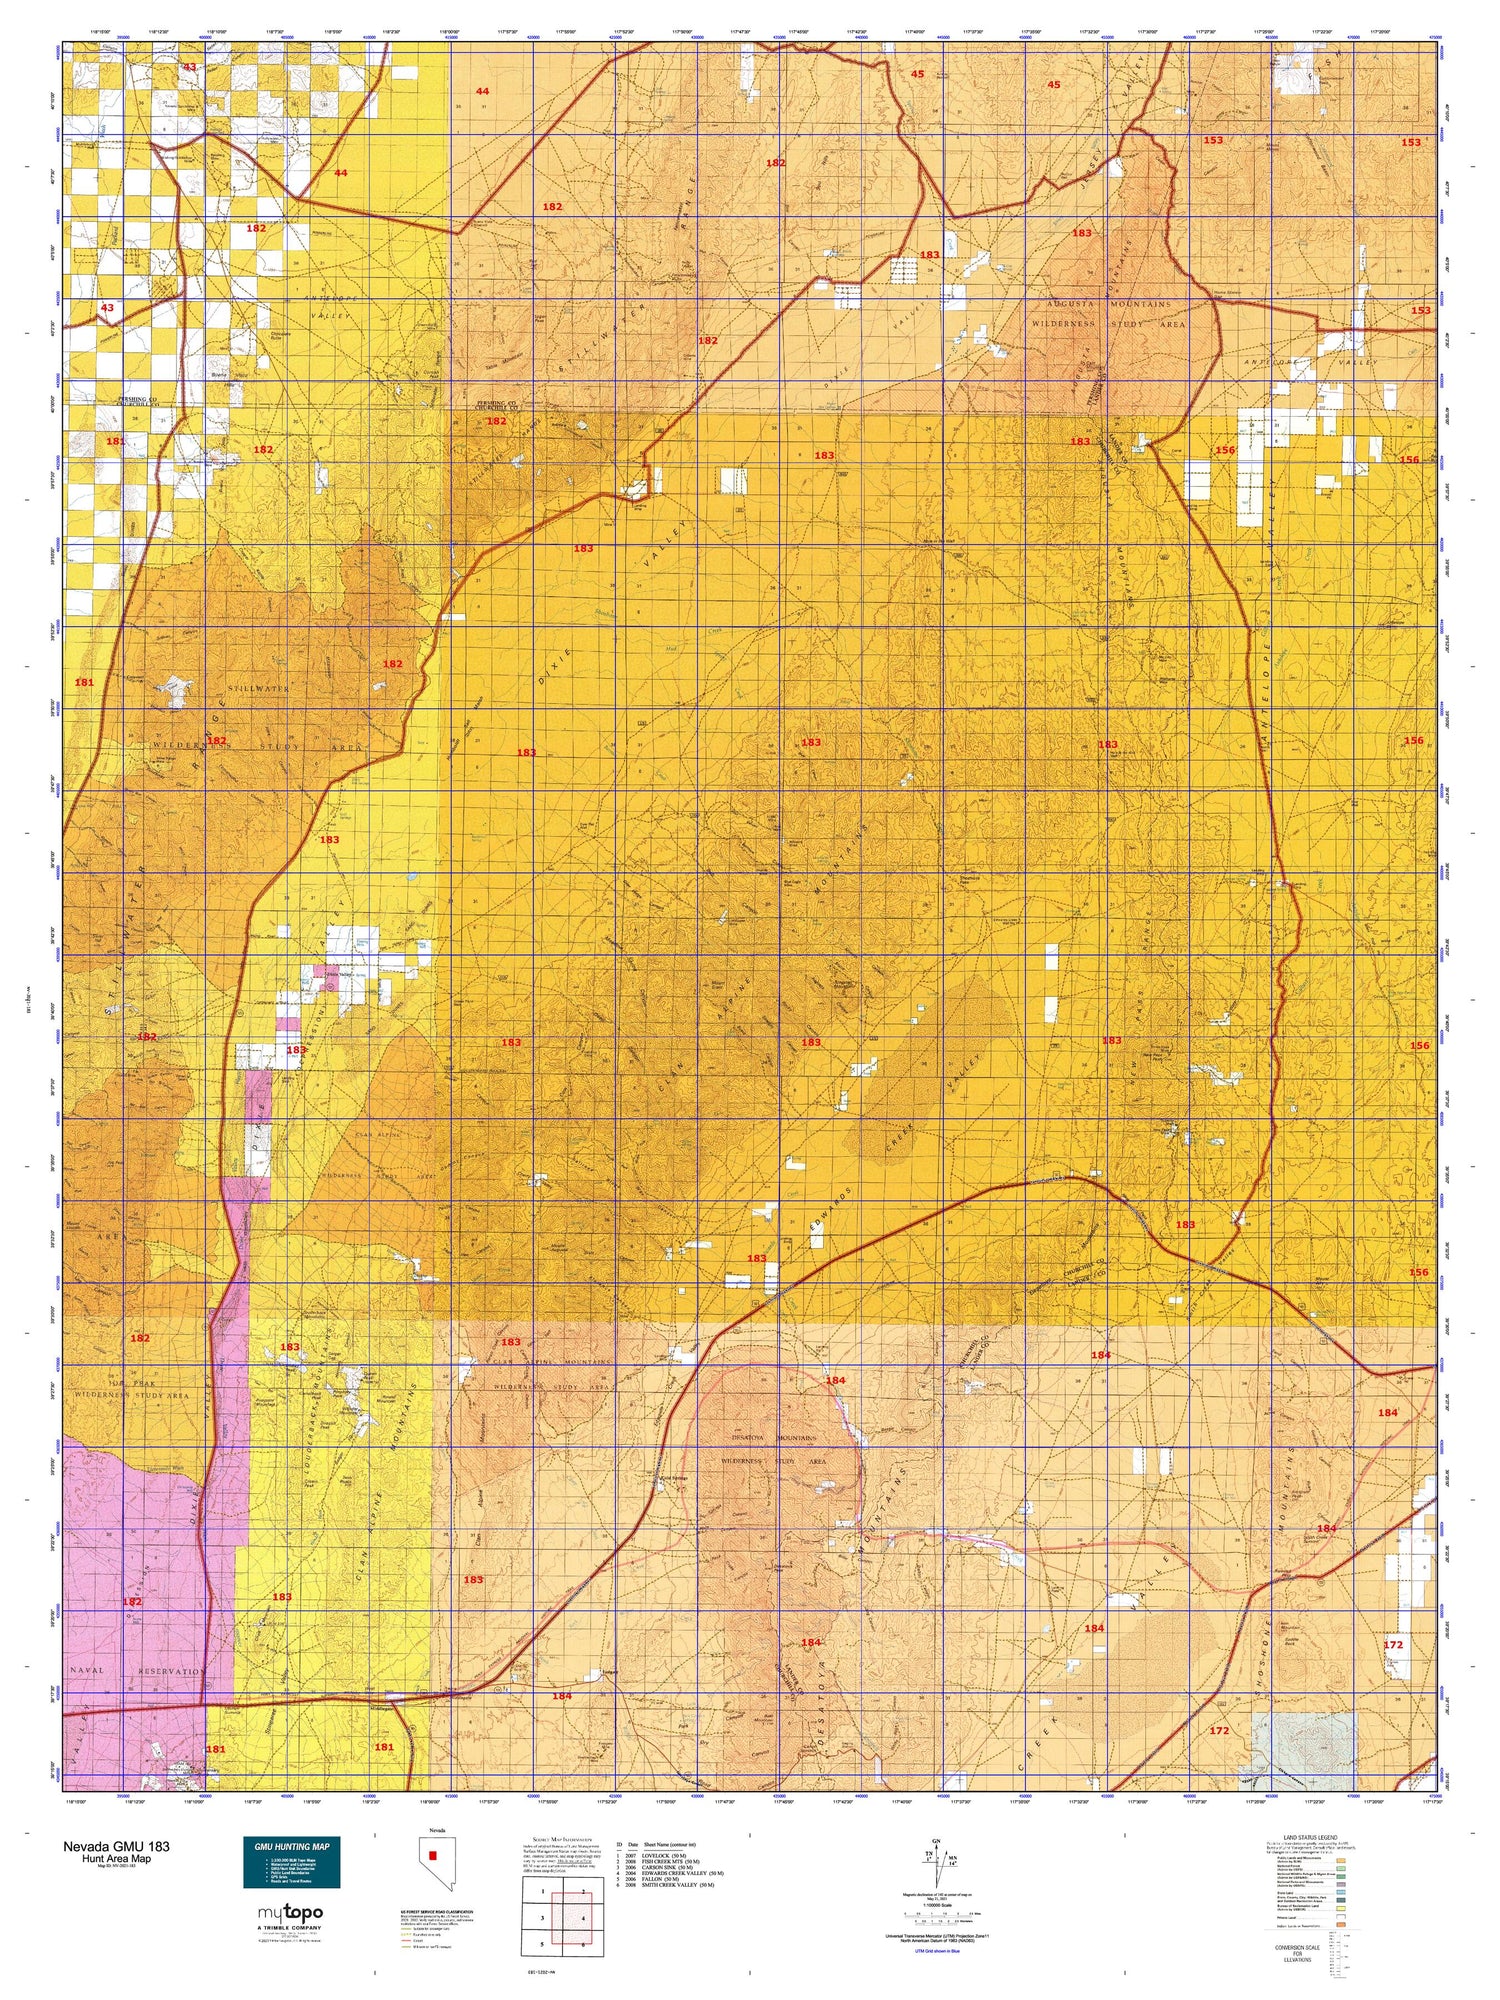 Nevada GMU 183 Map Image